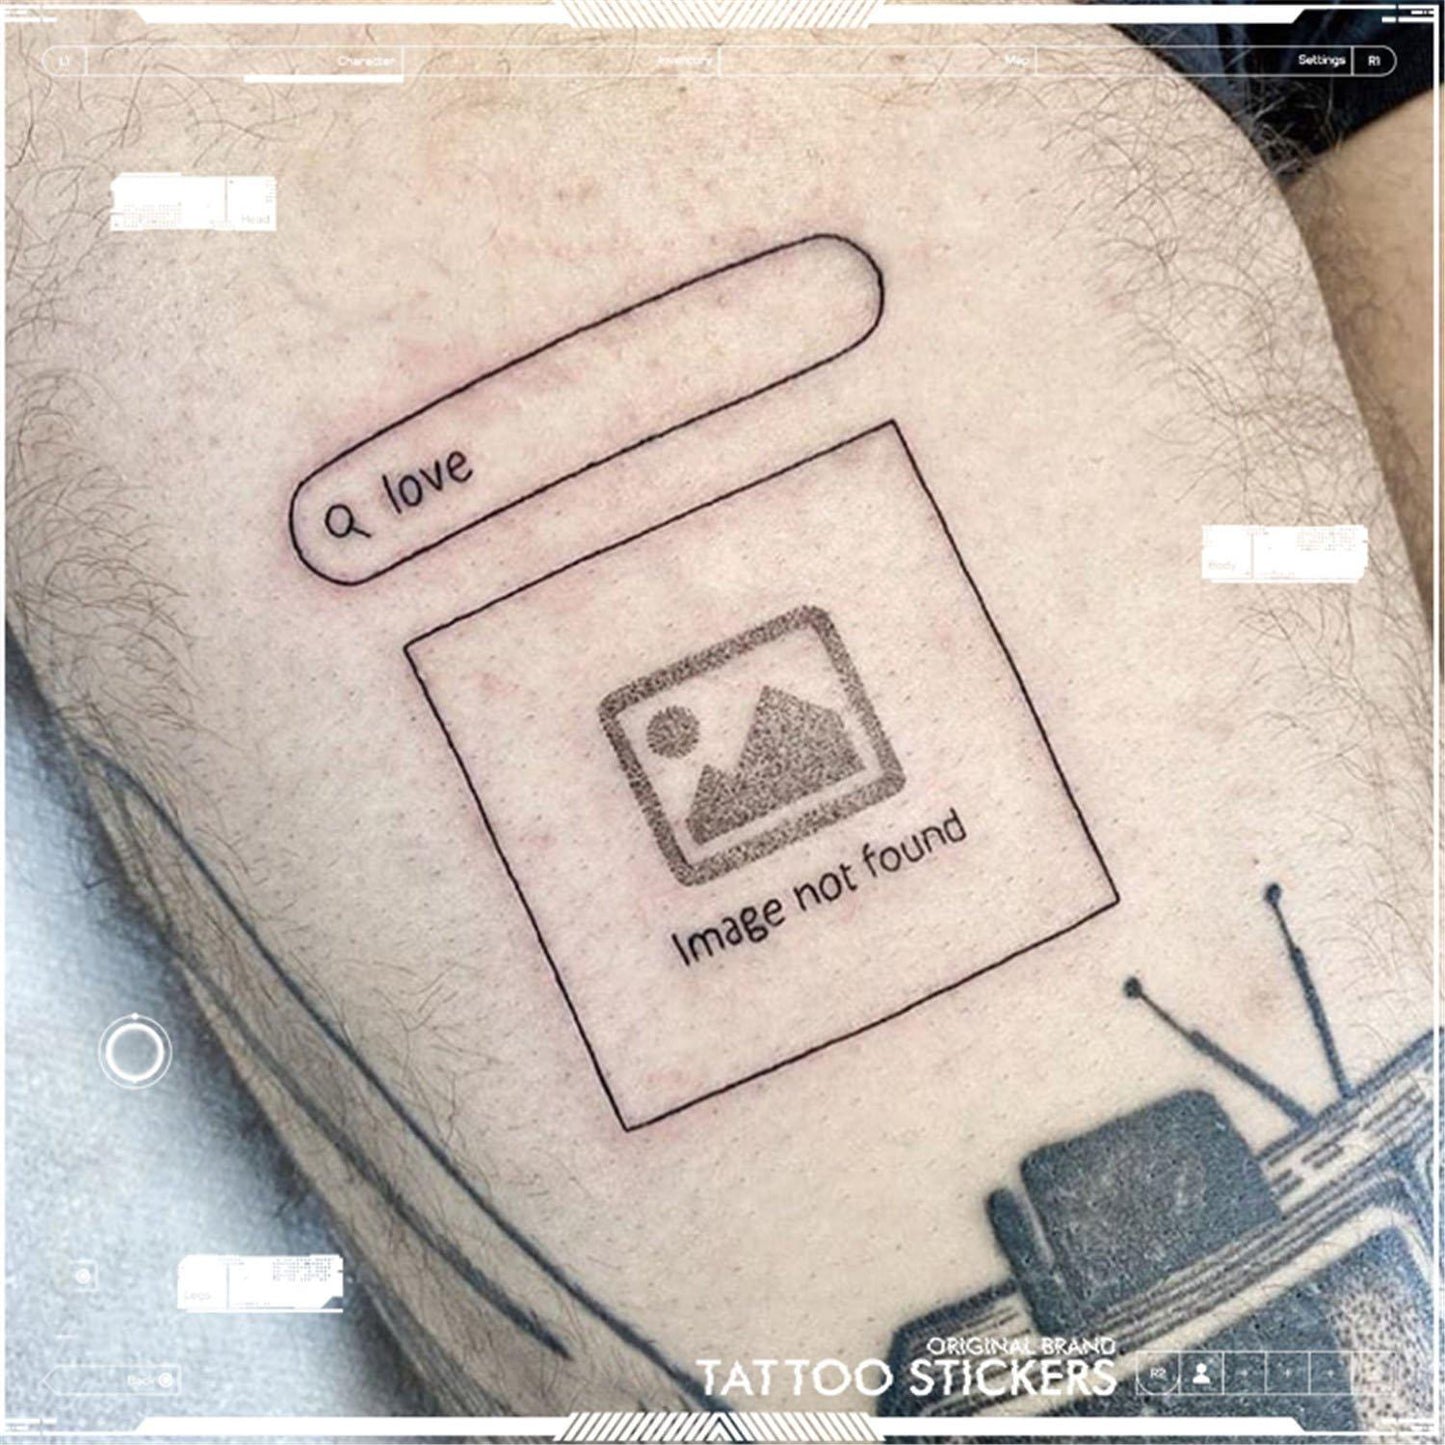 Image No Found Temporary Tattoo - StiCool